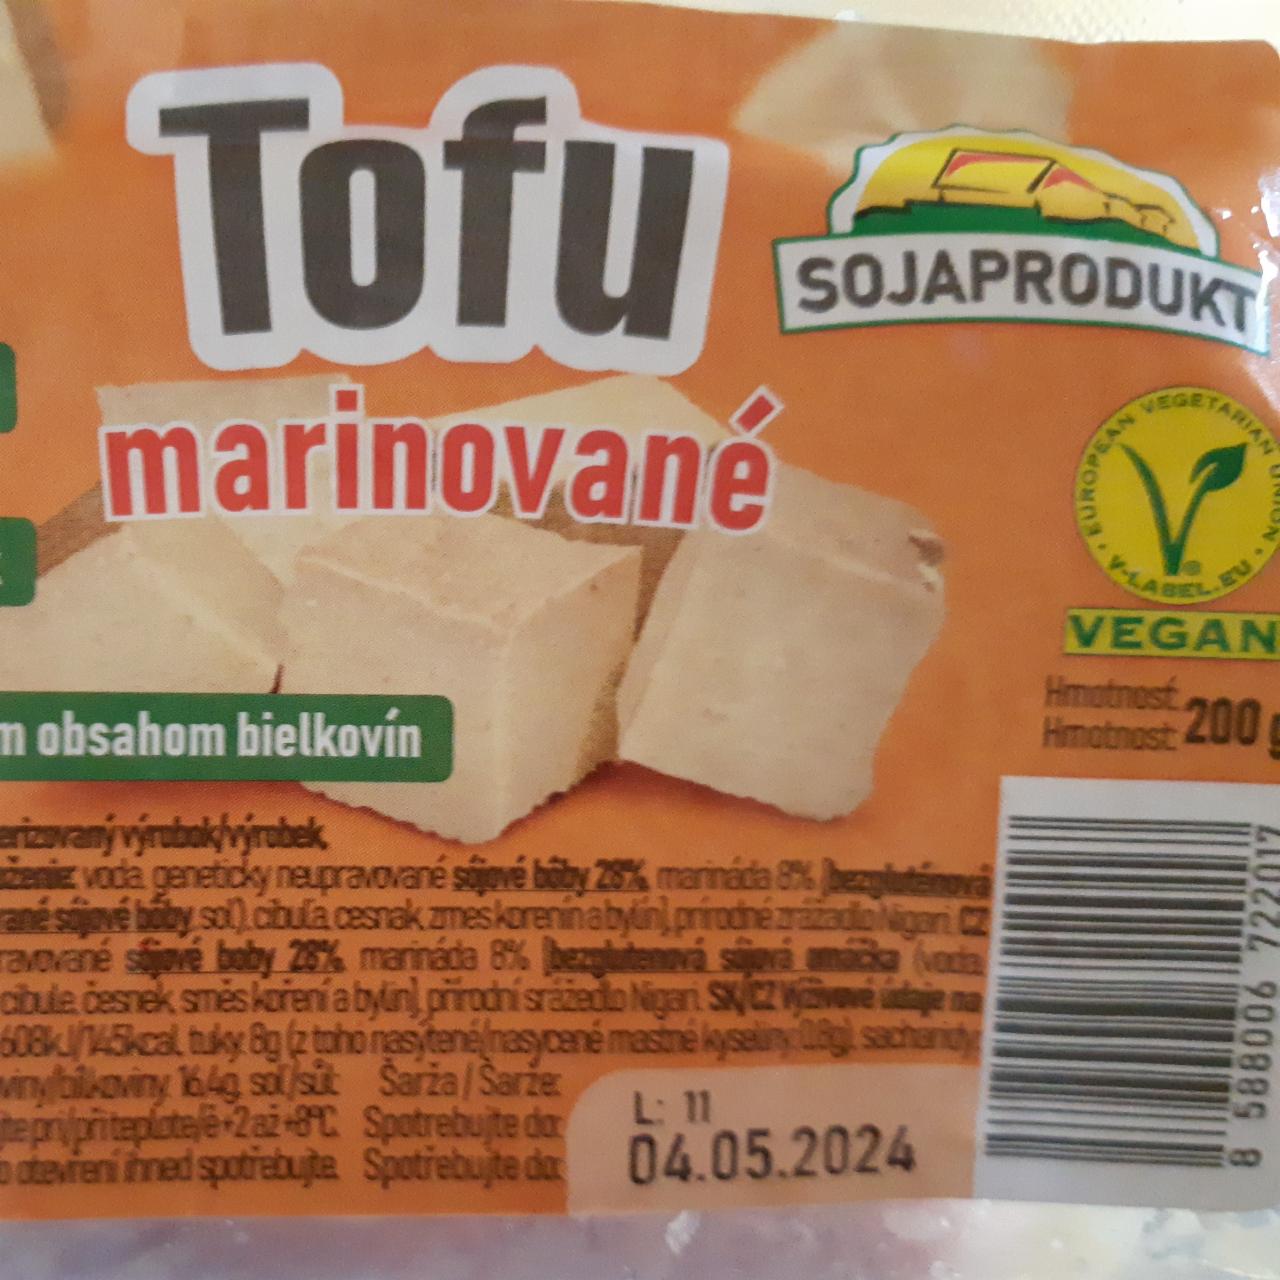 Fotografie - Tofu marinované Sojaprodukt